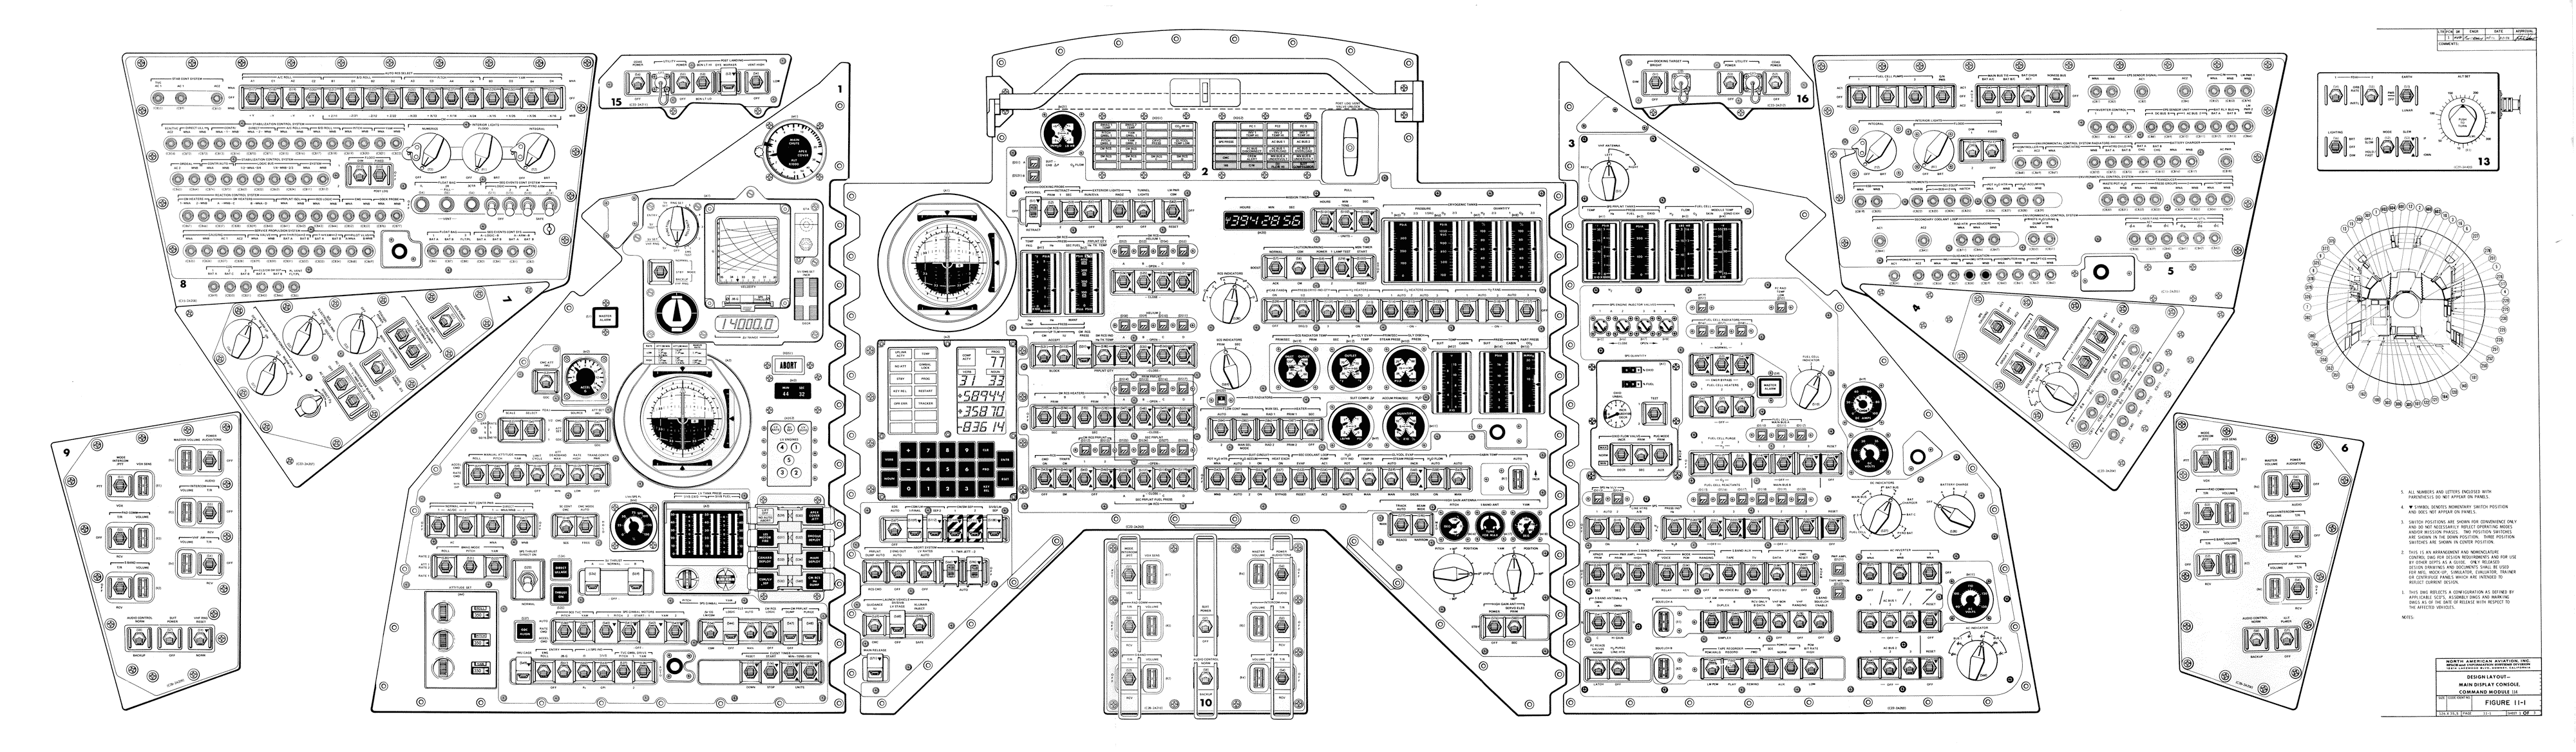 CSM114-panel-4000.gif